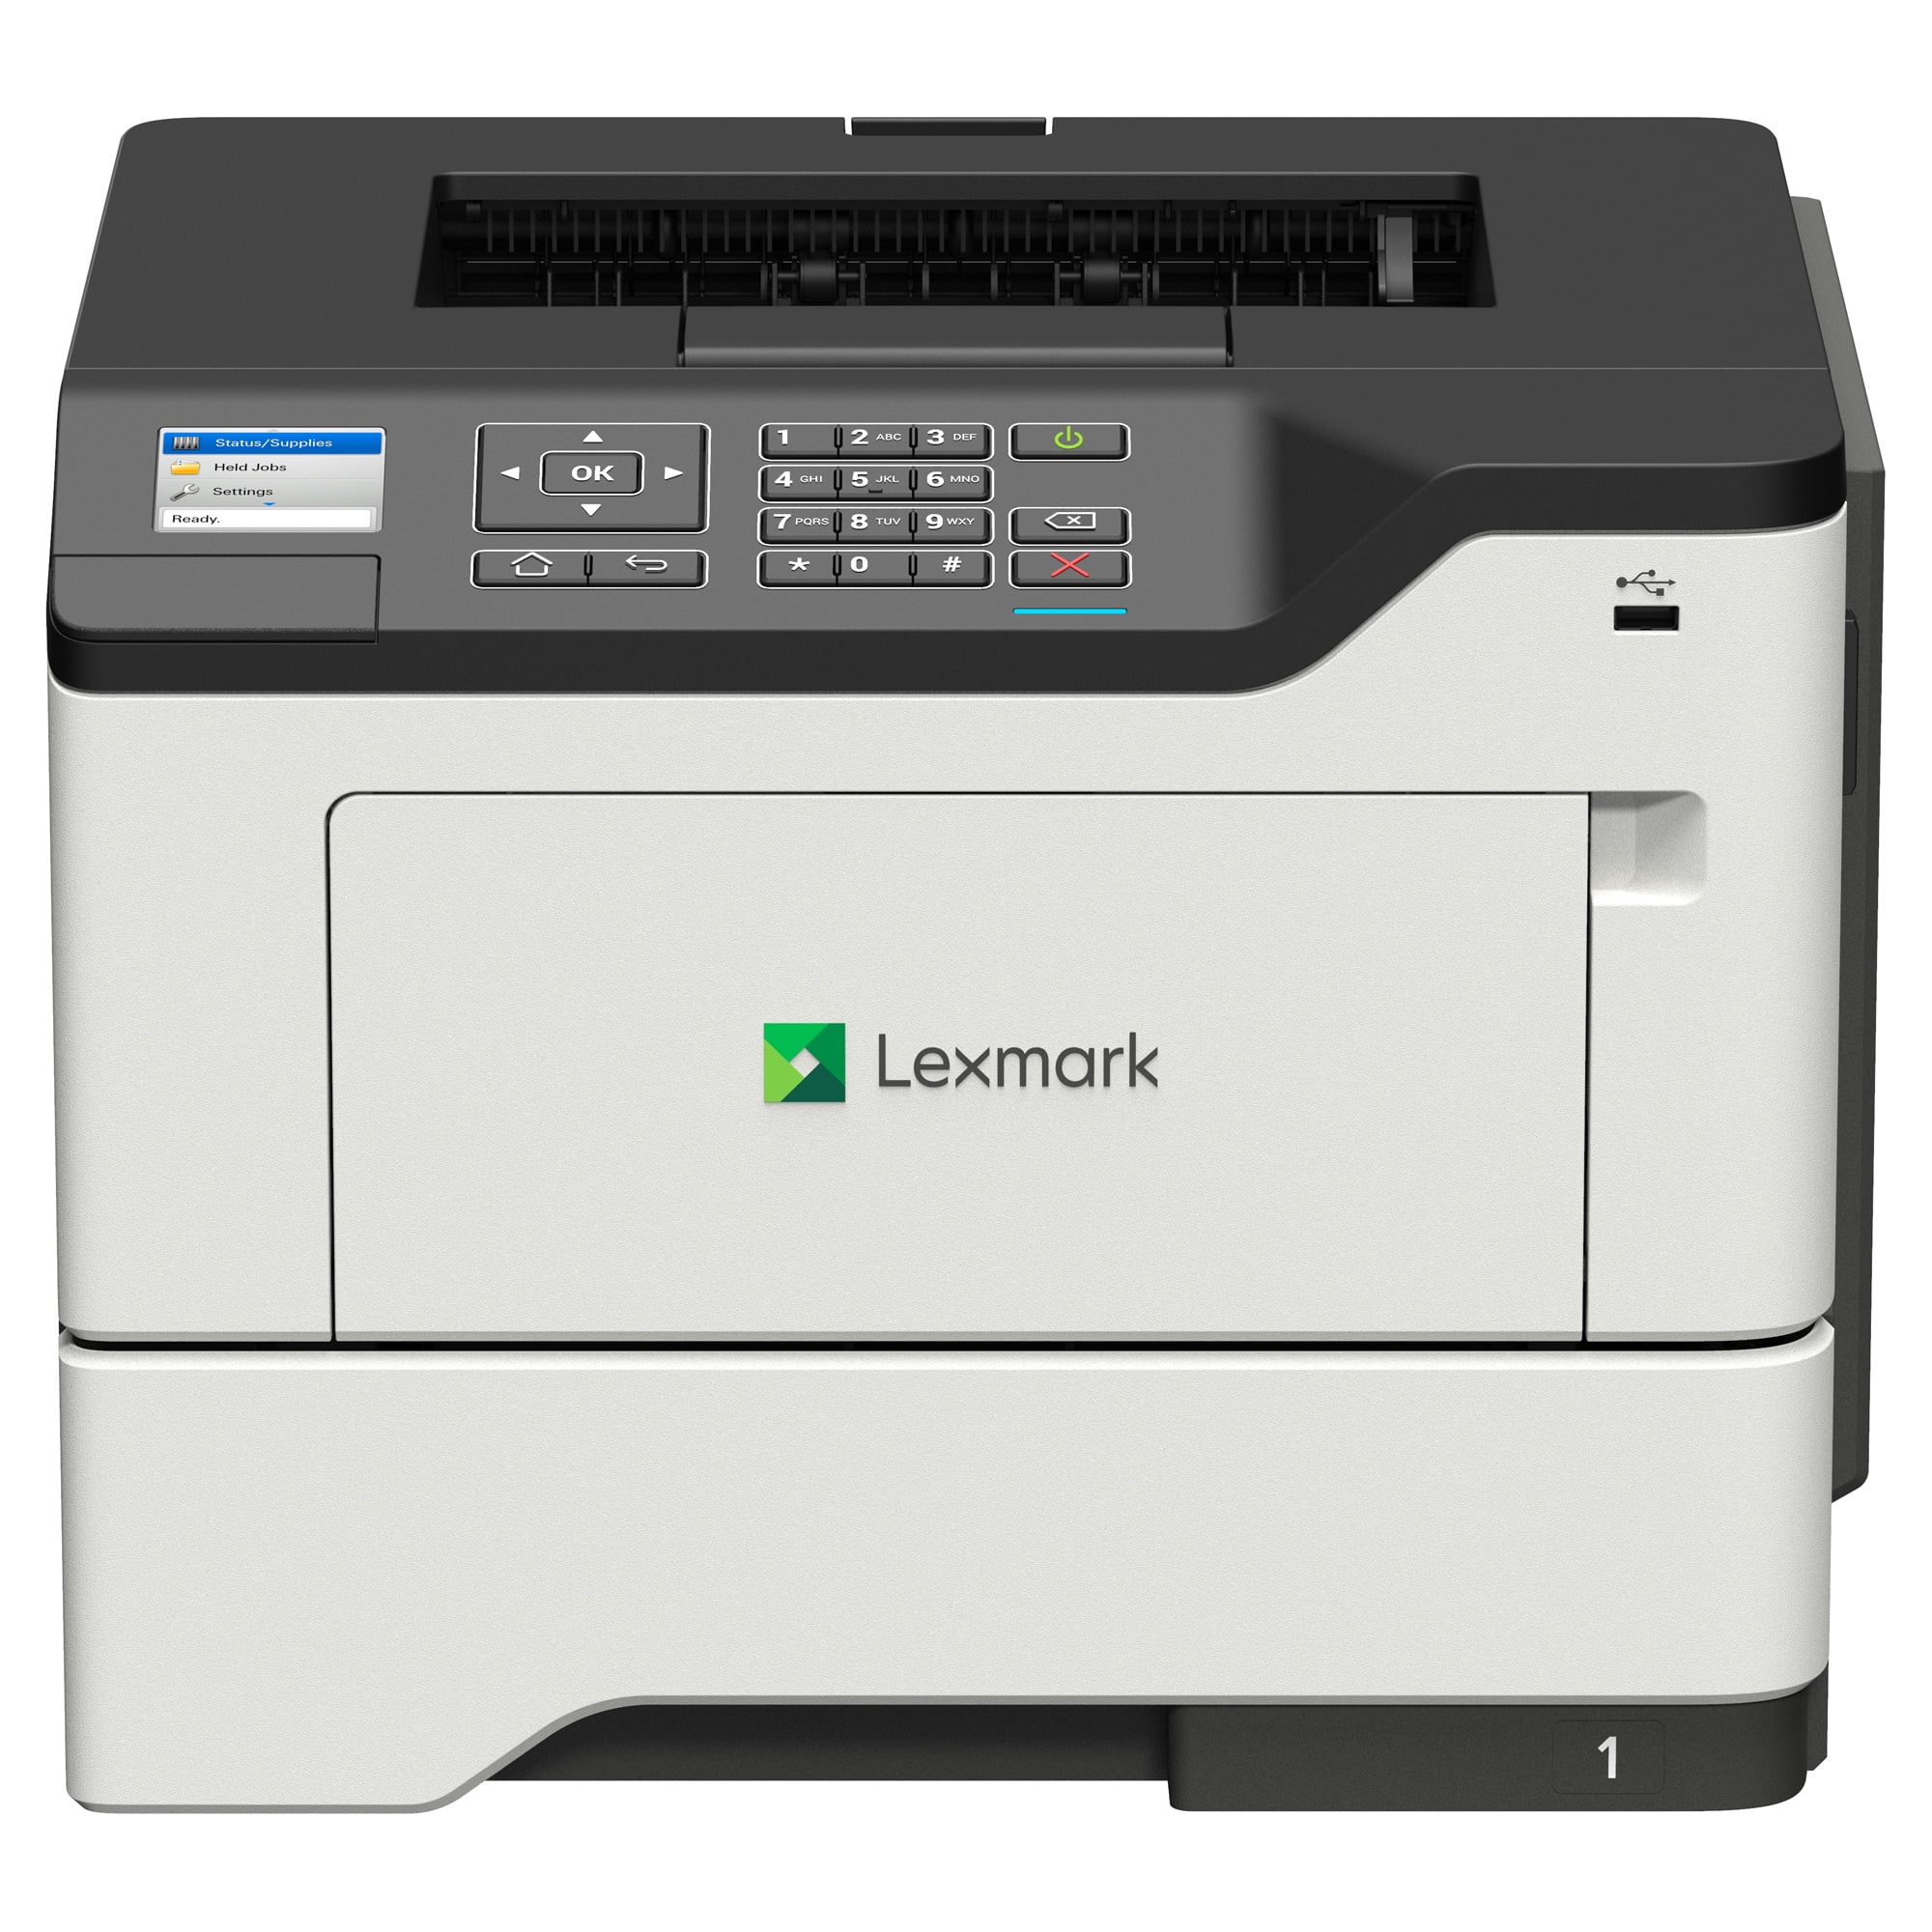 Picture of Lexmark 36S0400 MS621dn Monochrome Laser Printer - Gray